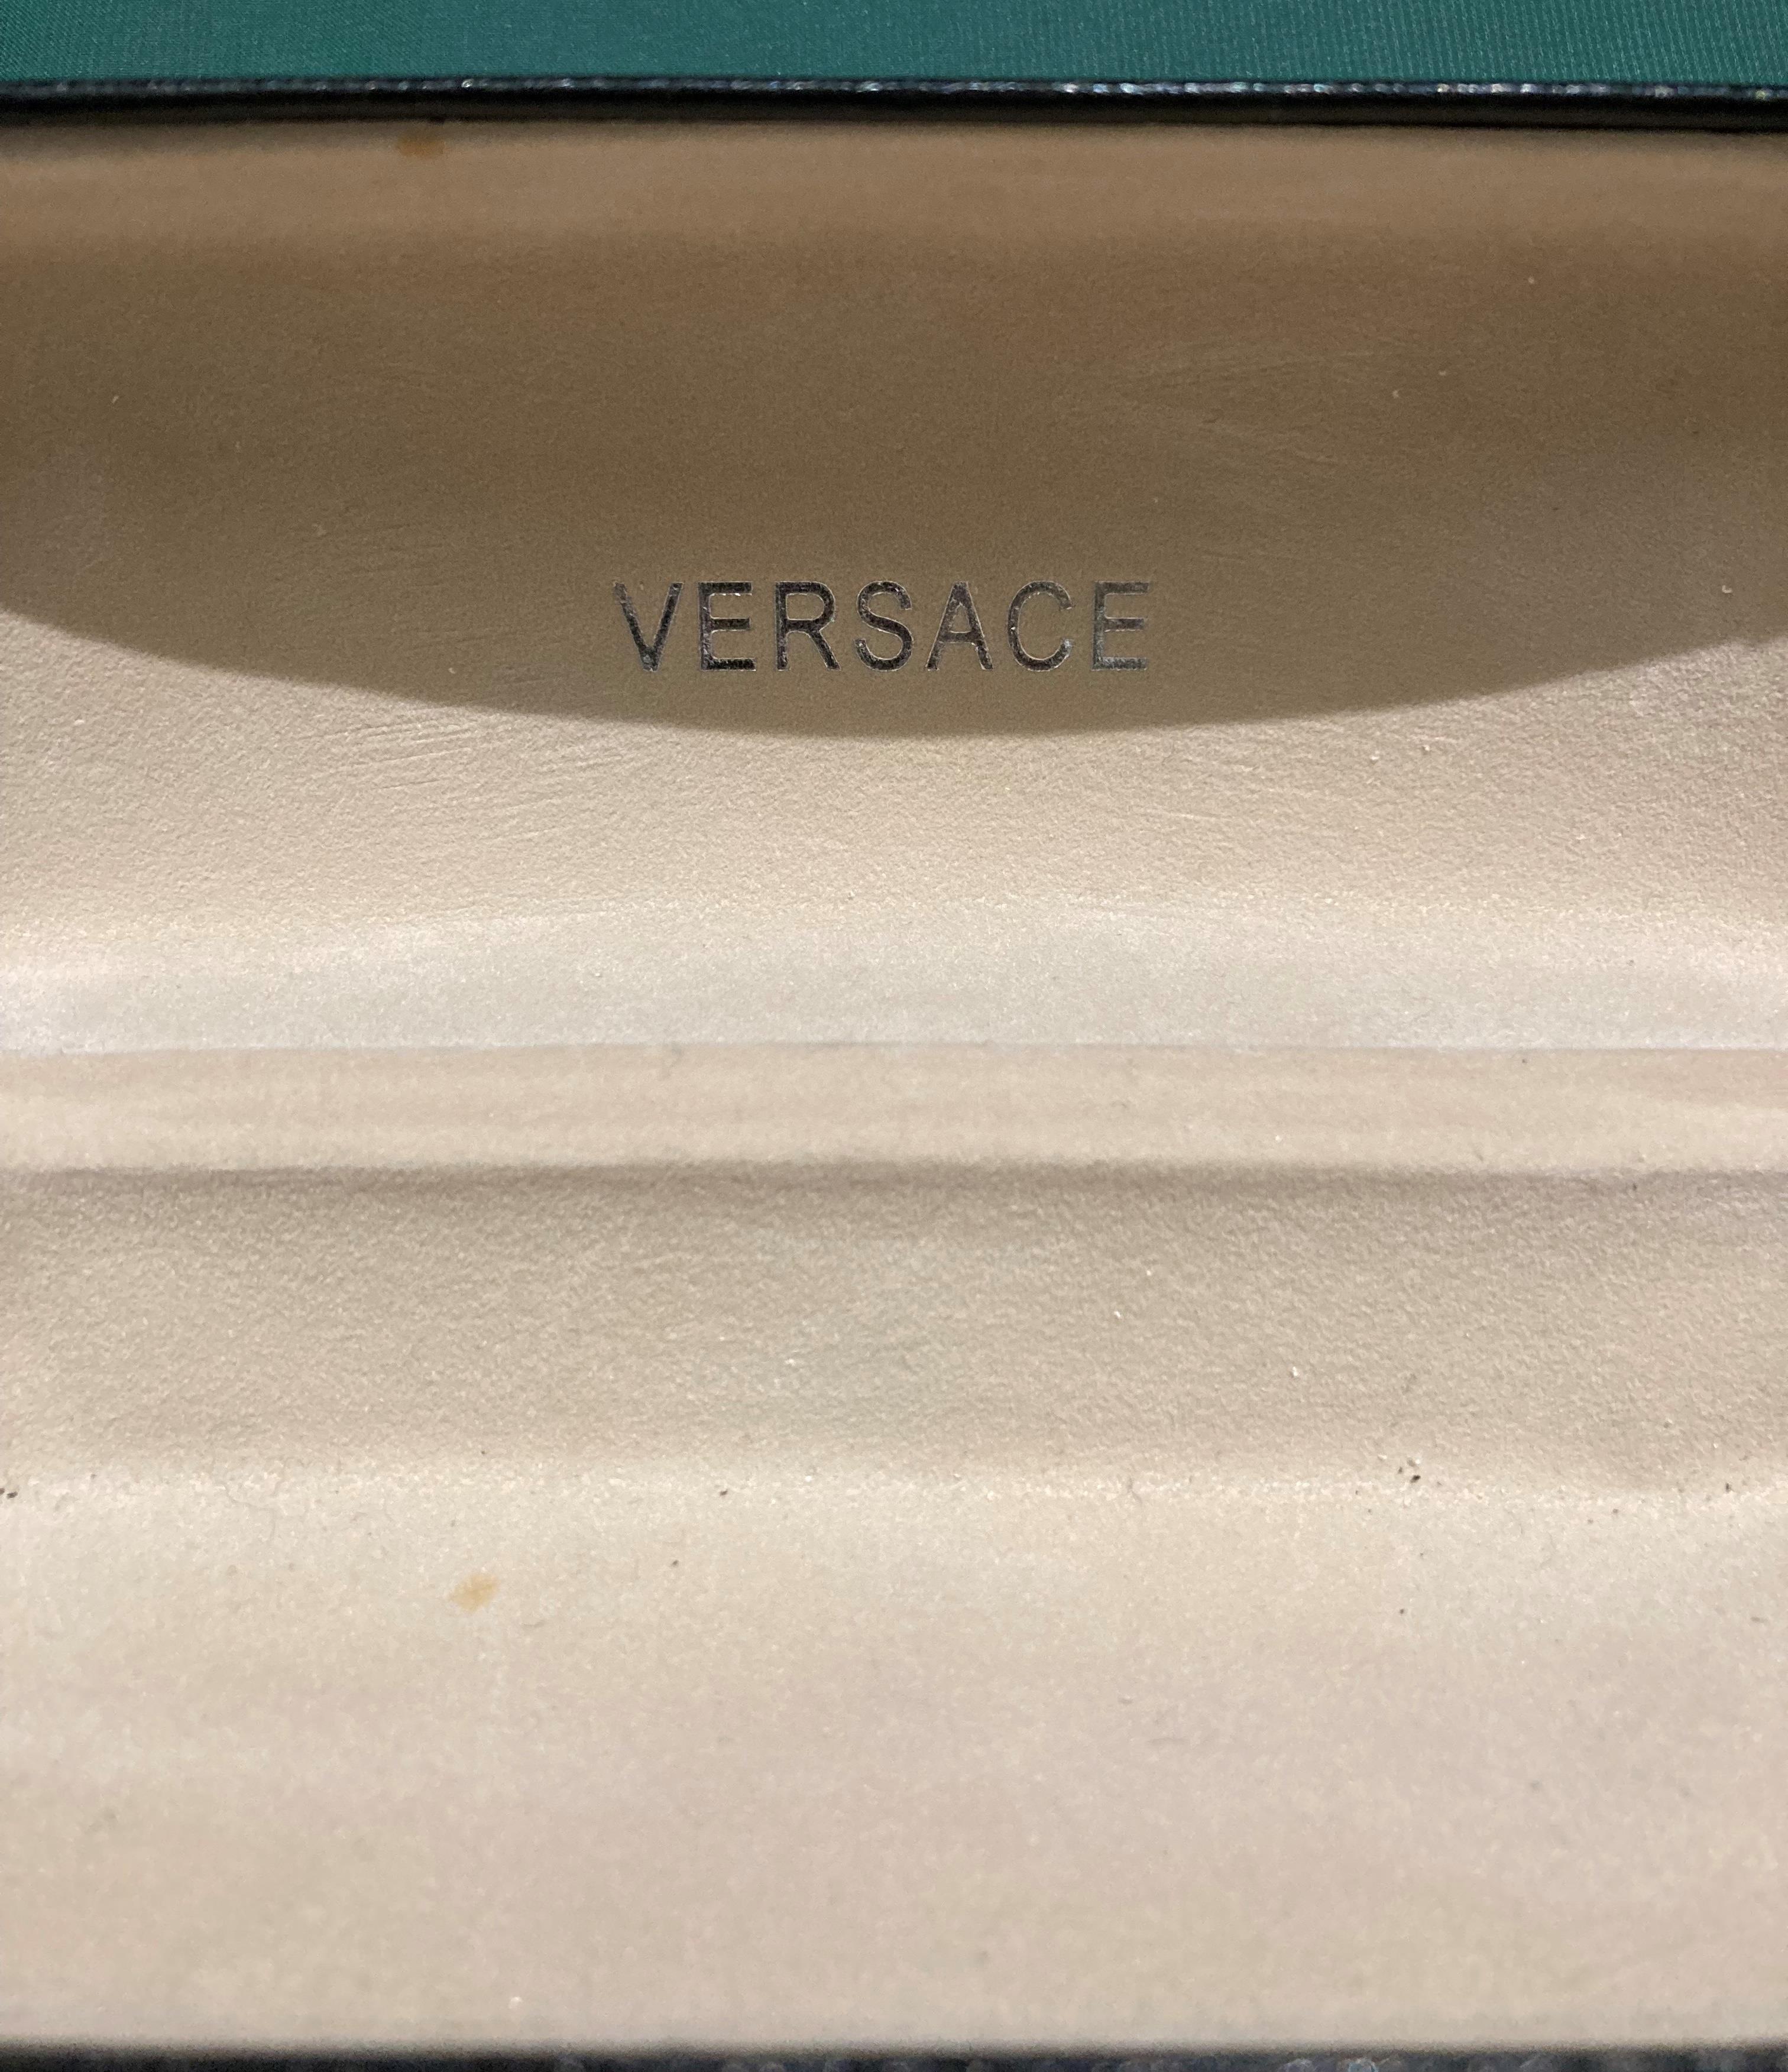 Pair of black Versace sunglasses, - Image 7 of 7